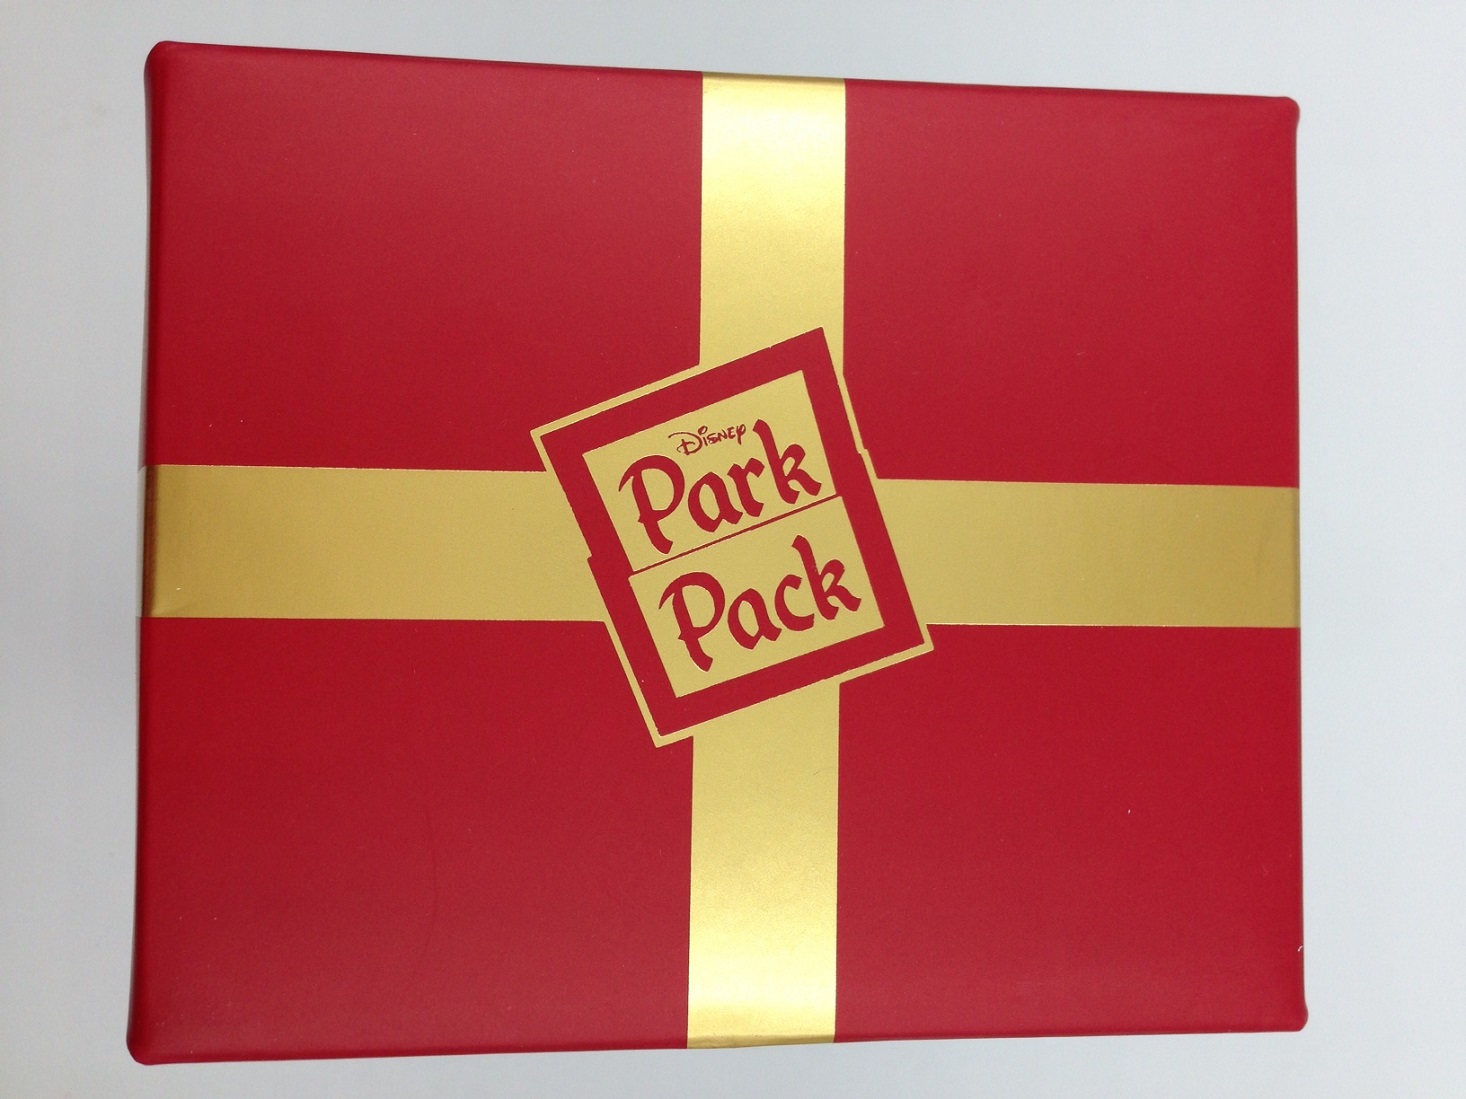 disney-park-pack-holiday-edition-september-box10